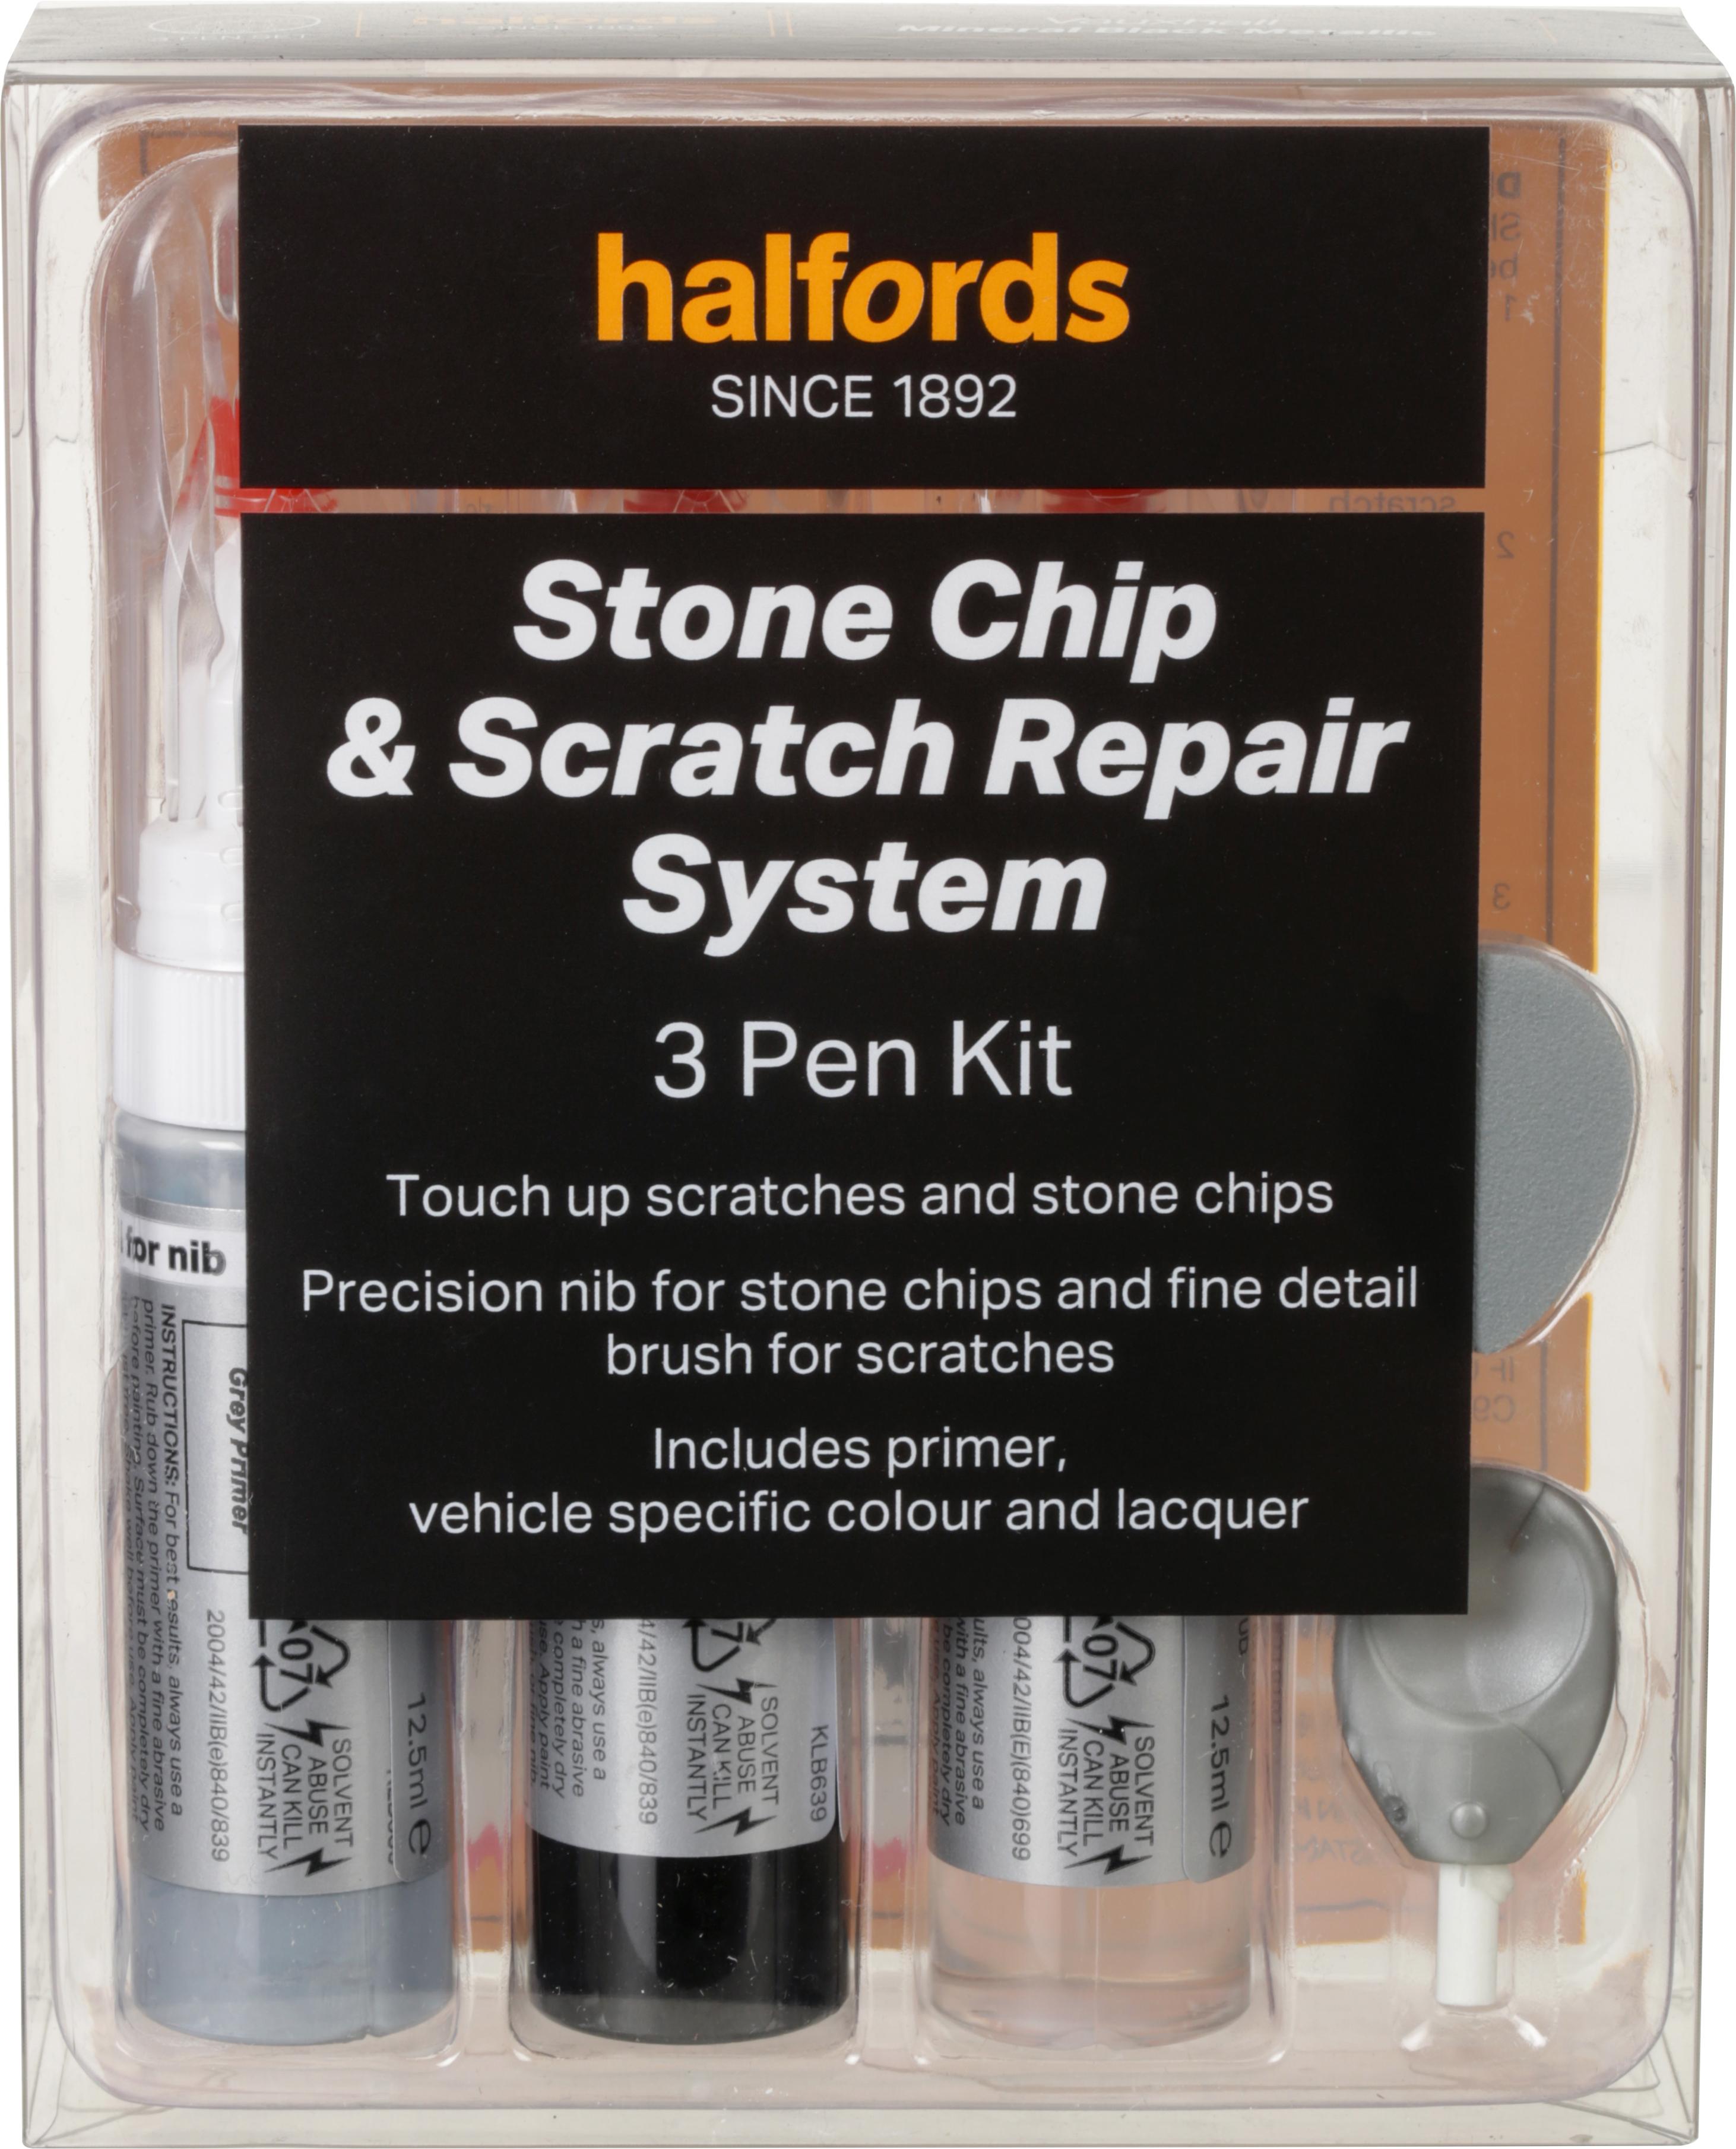 Halfords Vauxhall Mineral Black Scratch & Chip Repair Kit